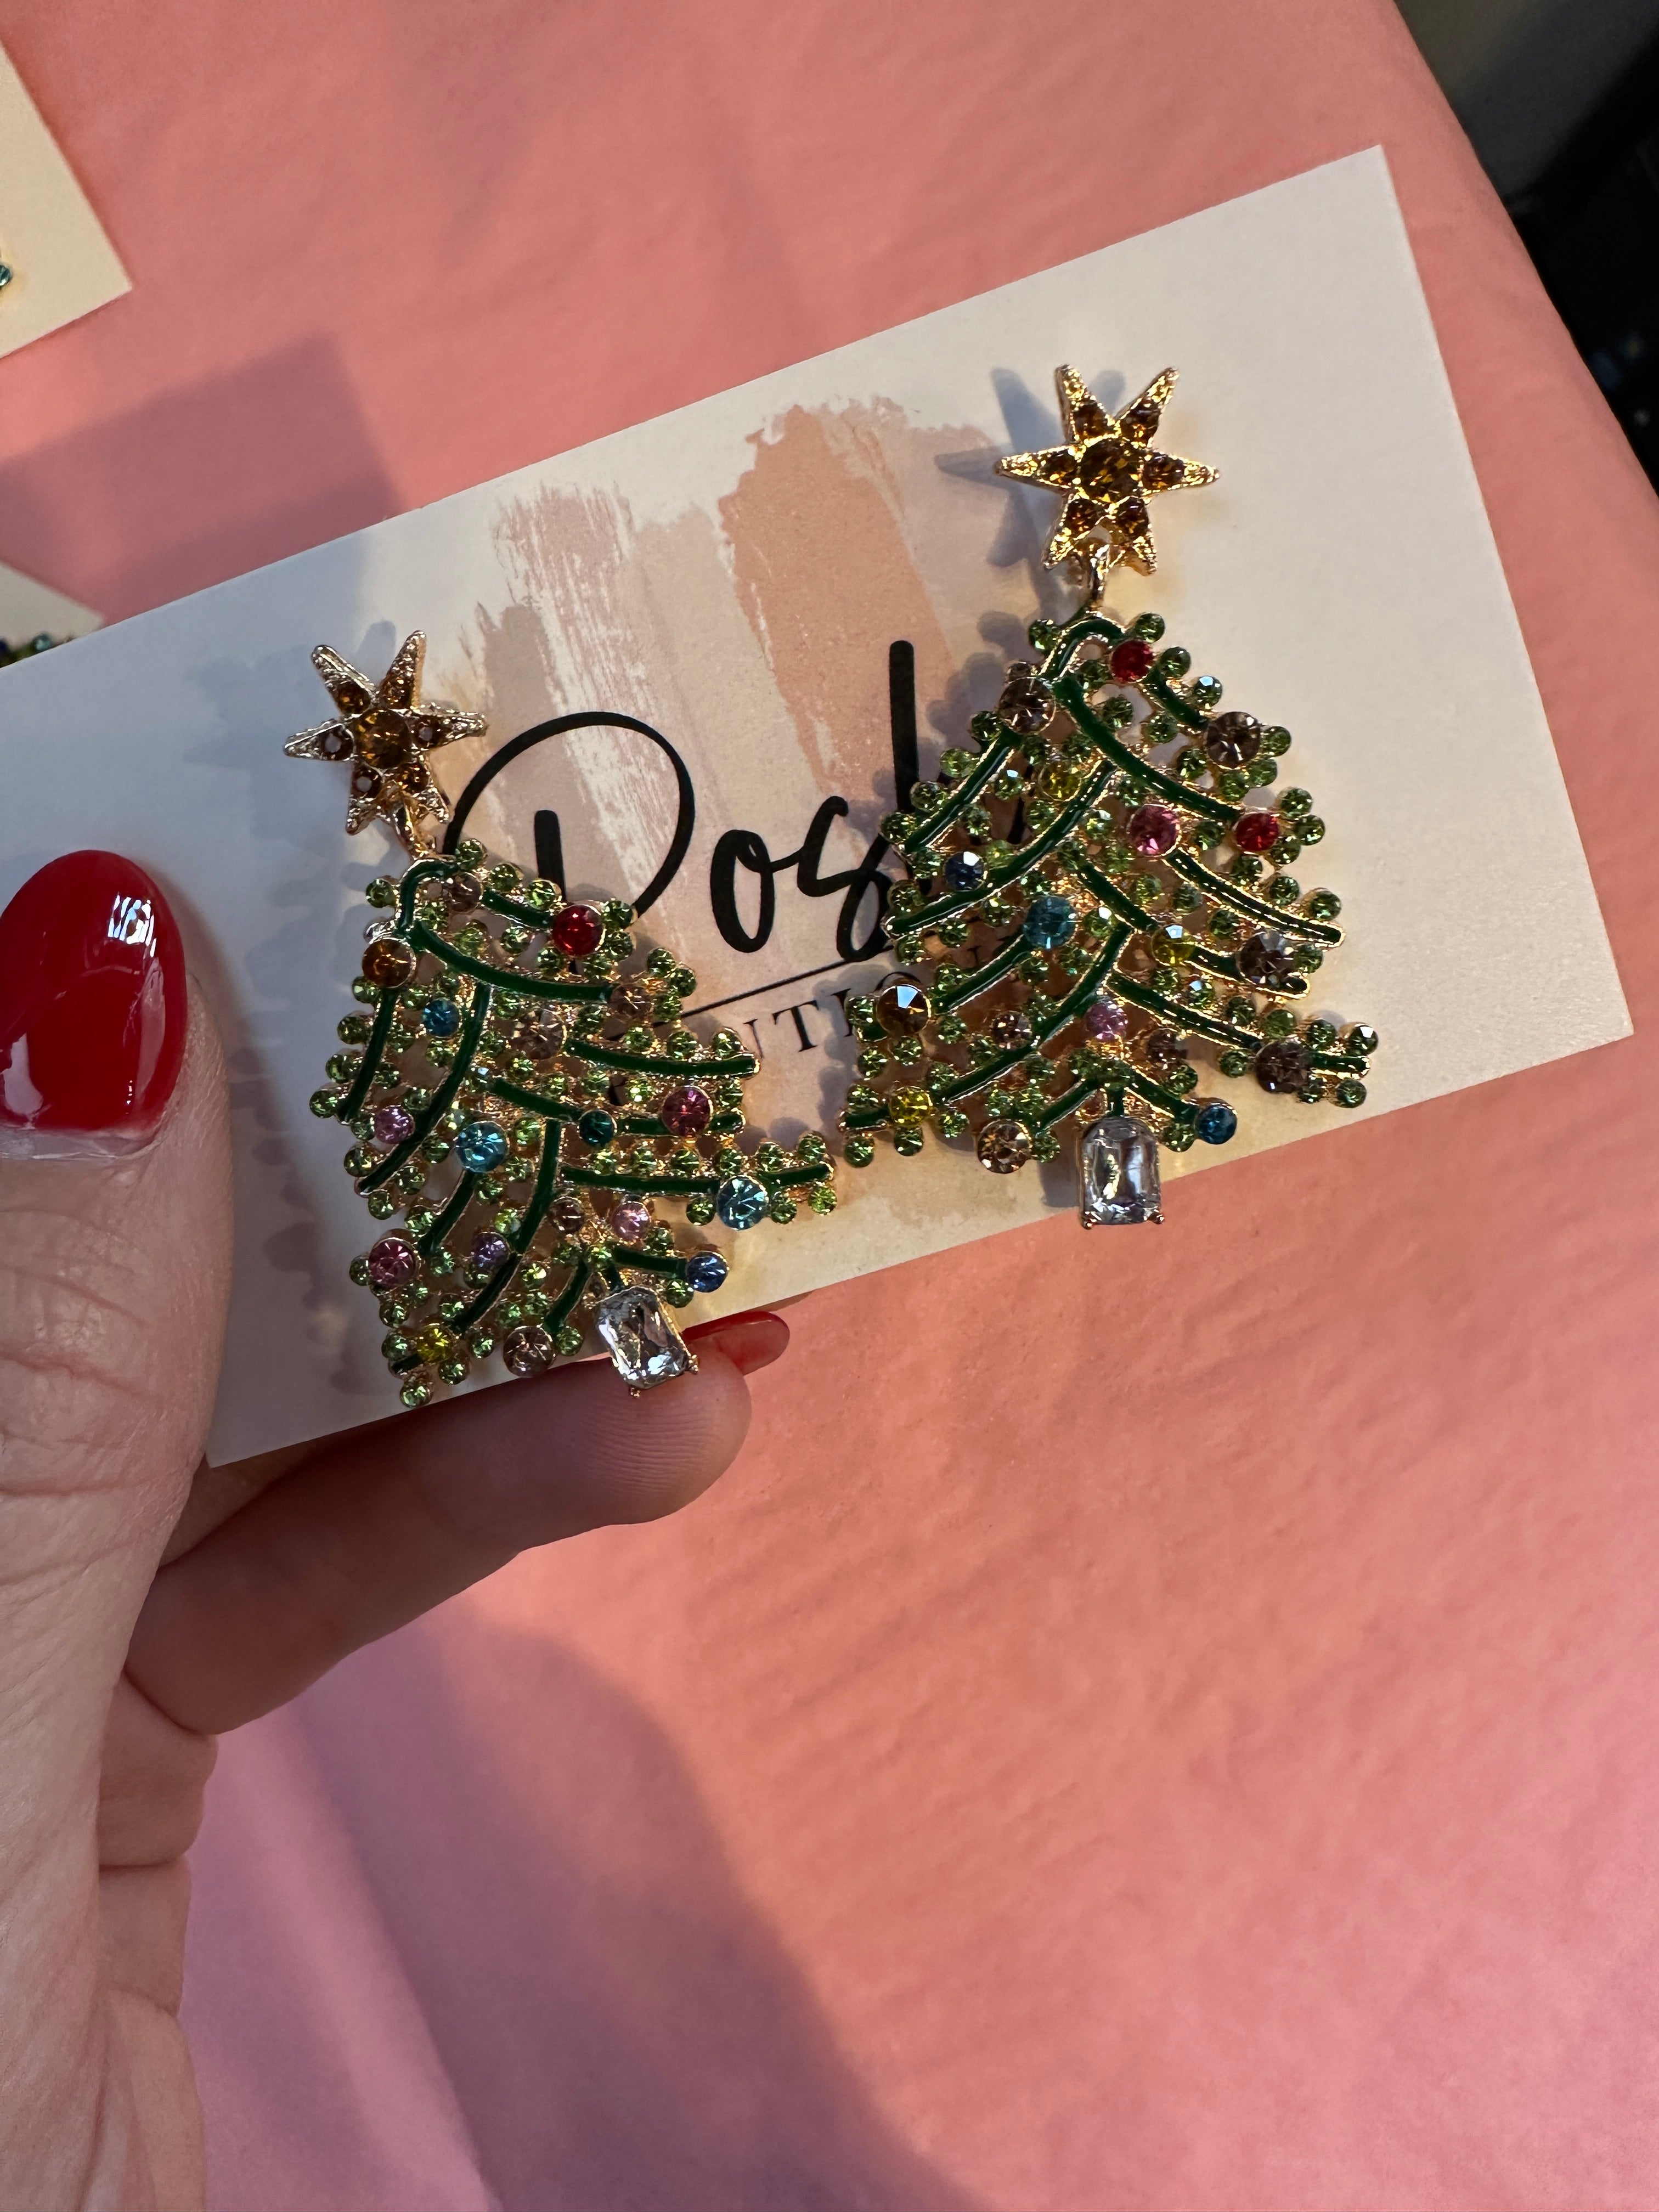 The Rhinestone Christmas Tree Earring